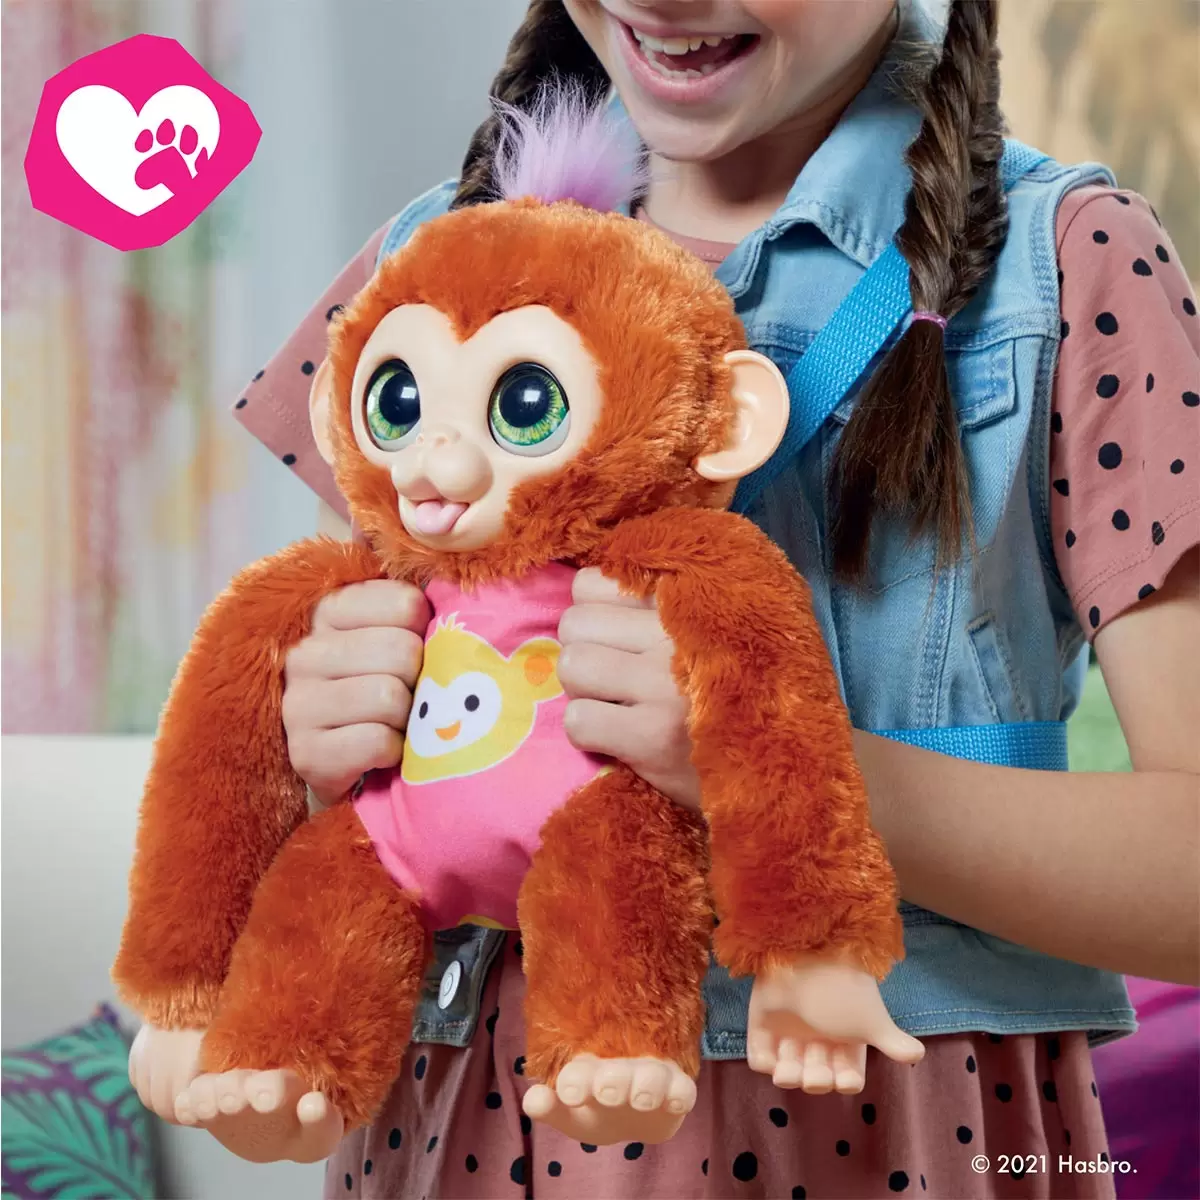 Buy FurReal Monkey at Costco.co.uk